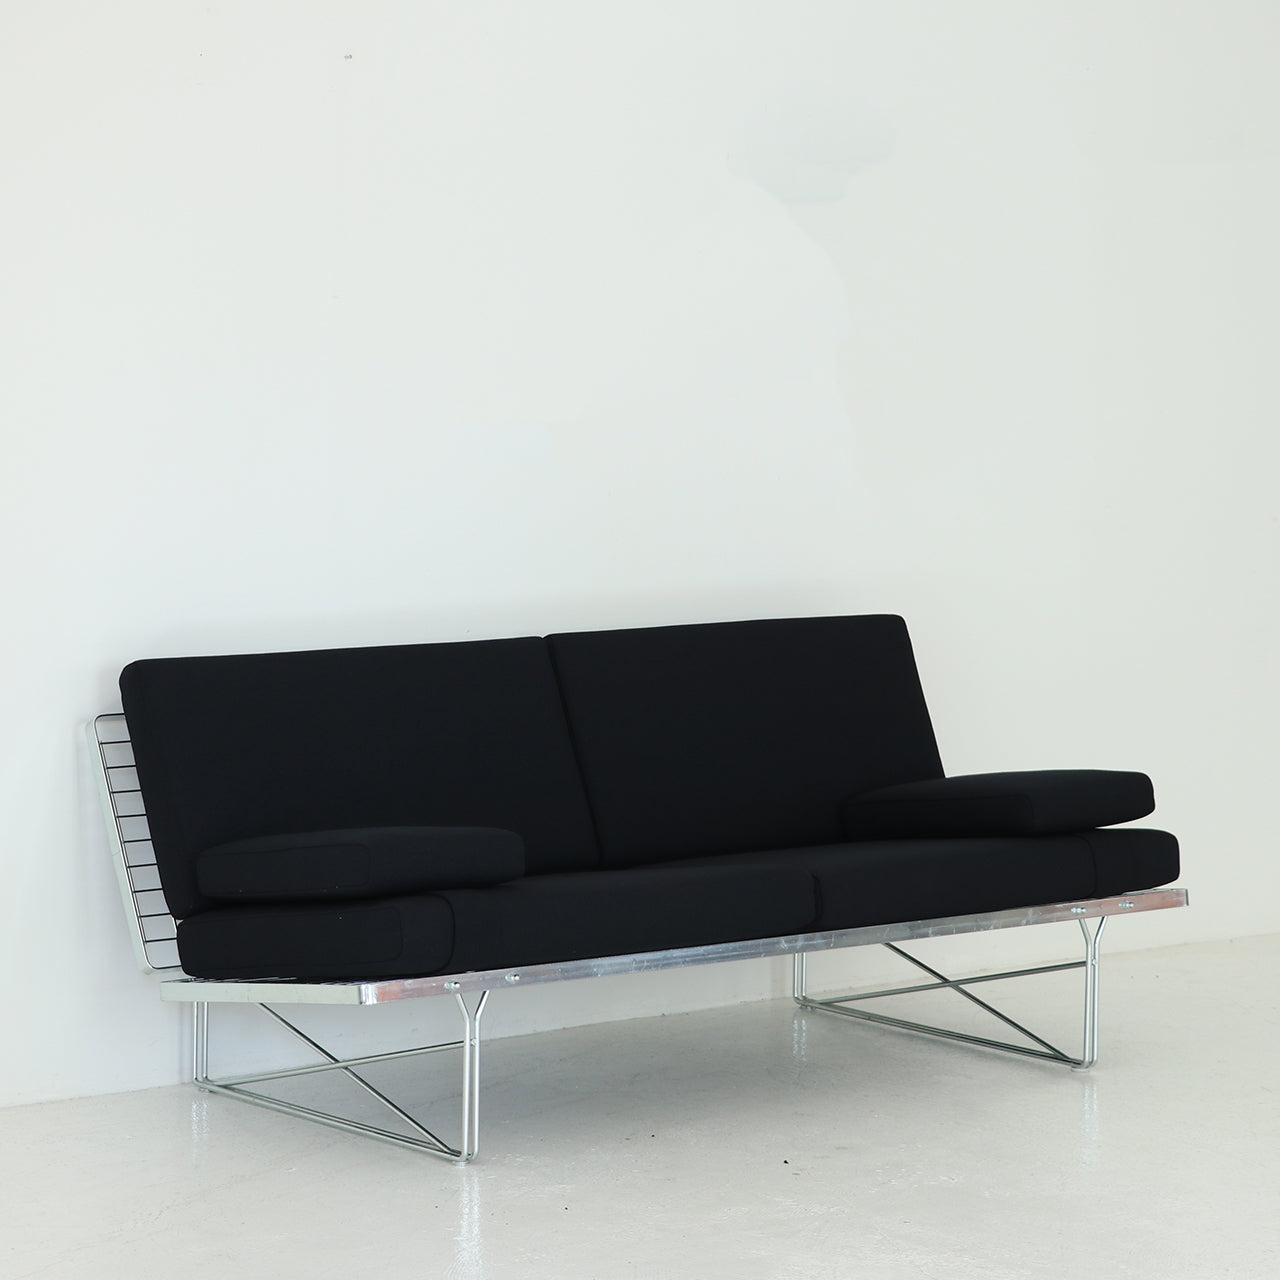 Moment sofa / Niels Gammelgaard for IKEA